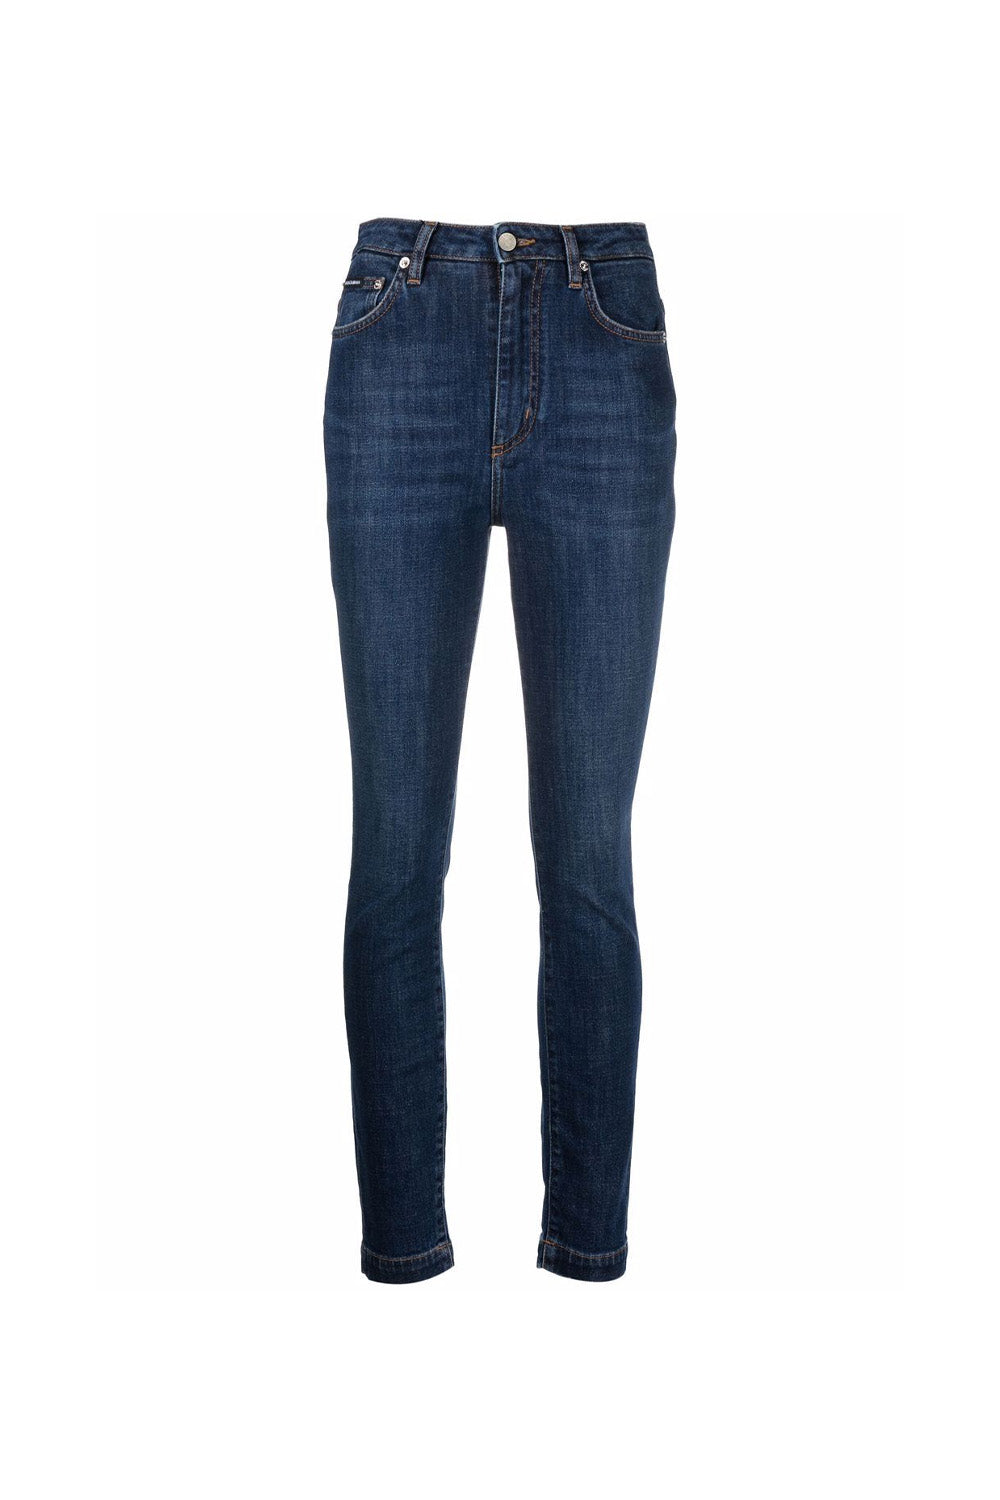 Dolce & Gabbana high-rise skinny jeans